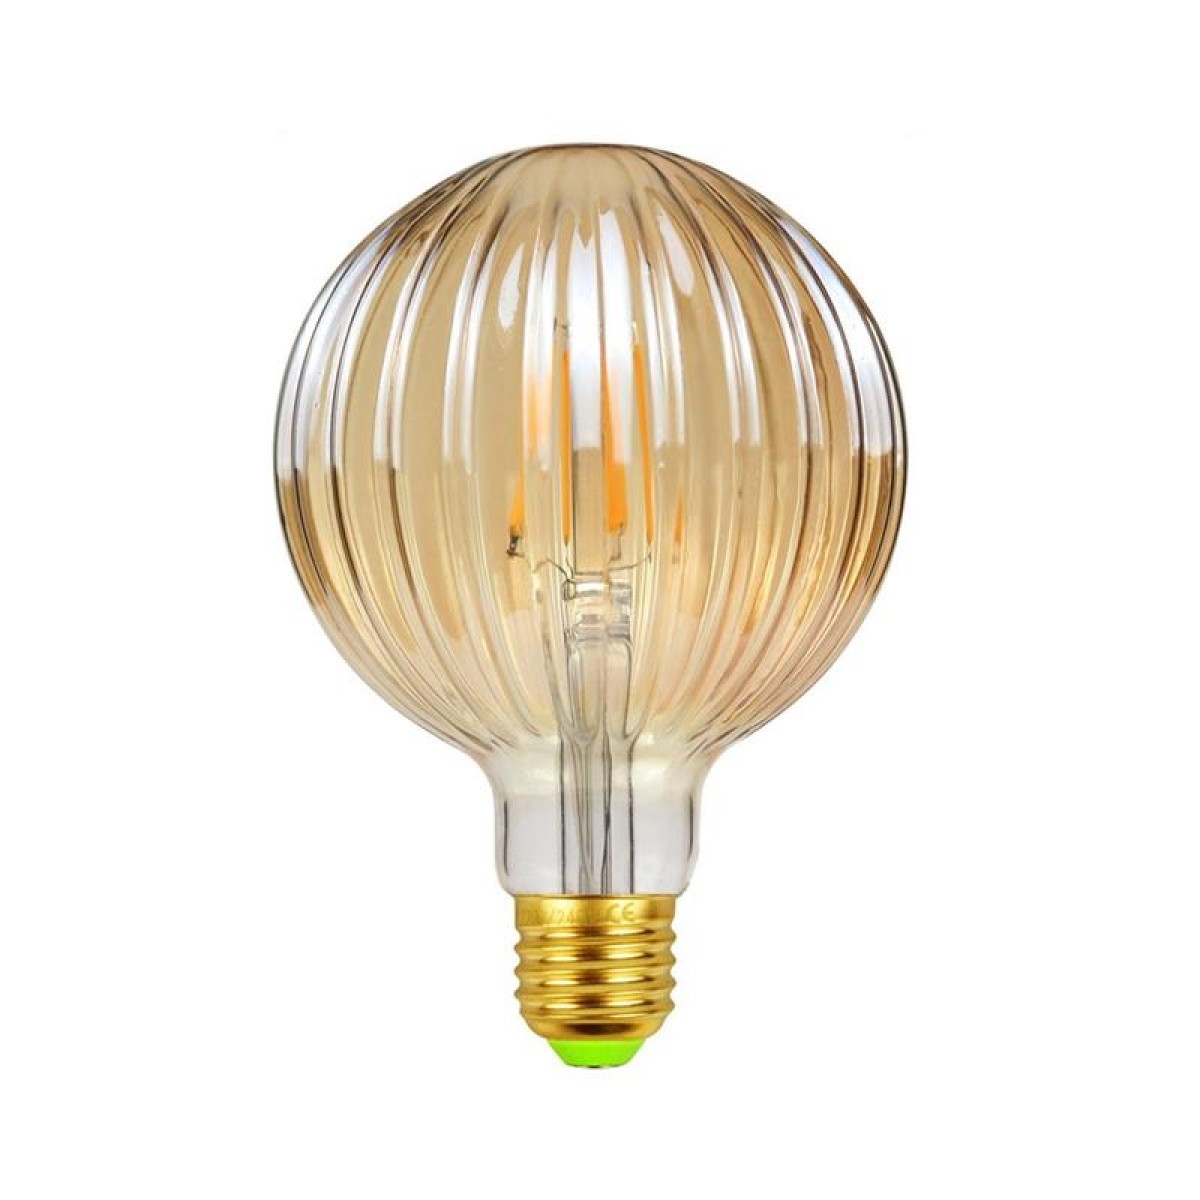 E27 Screw Port LED Vintage Light Shaped Decorative Illumination Bulb, Style: G95 Watermelon Gold(220V 4W 2700K)